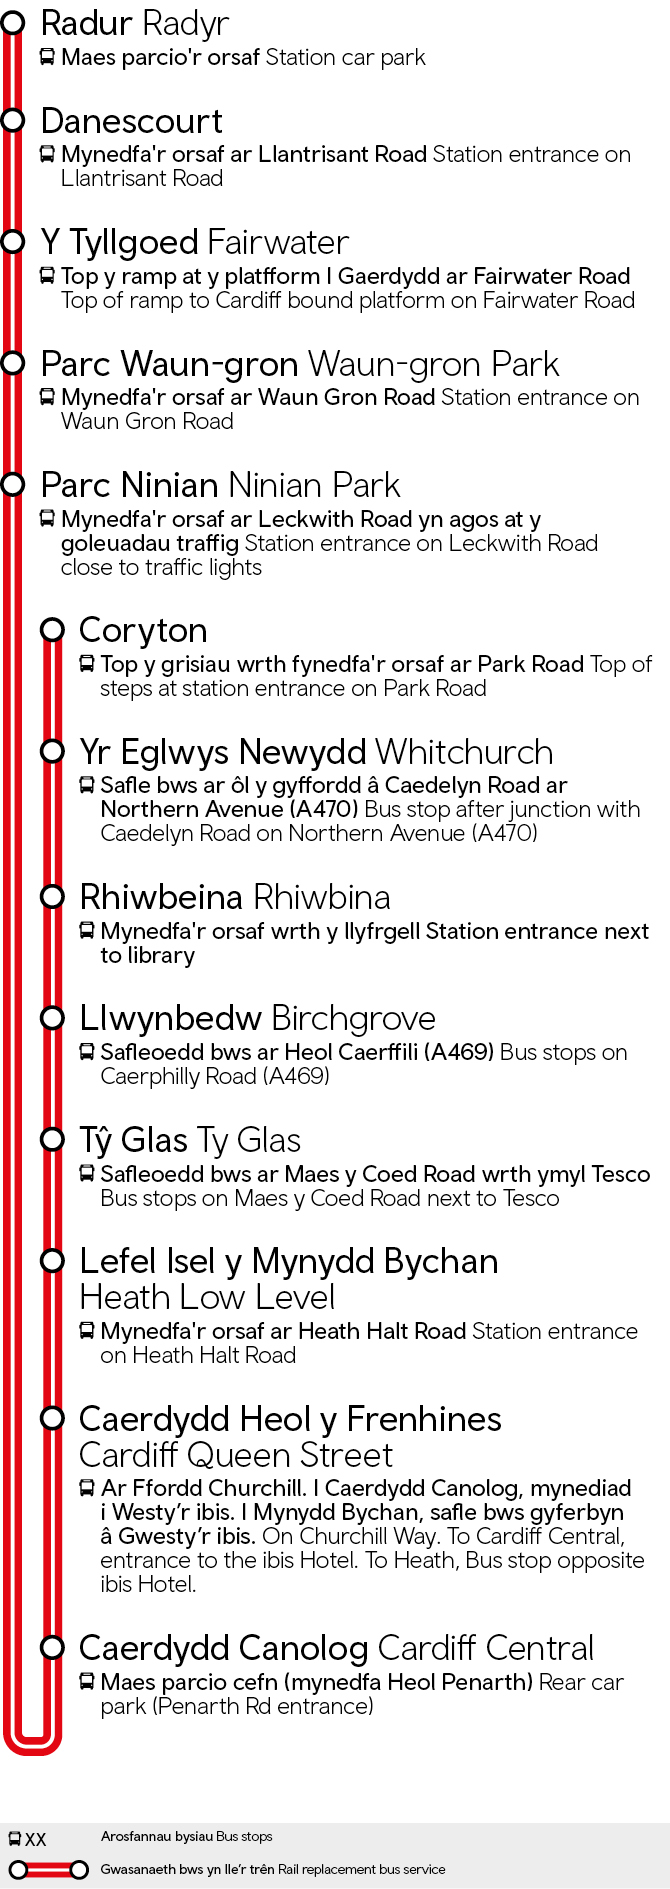 Cardiff Central - Coryton